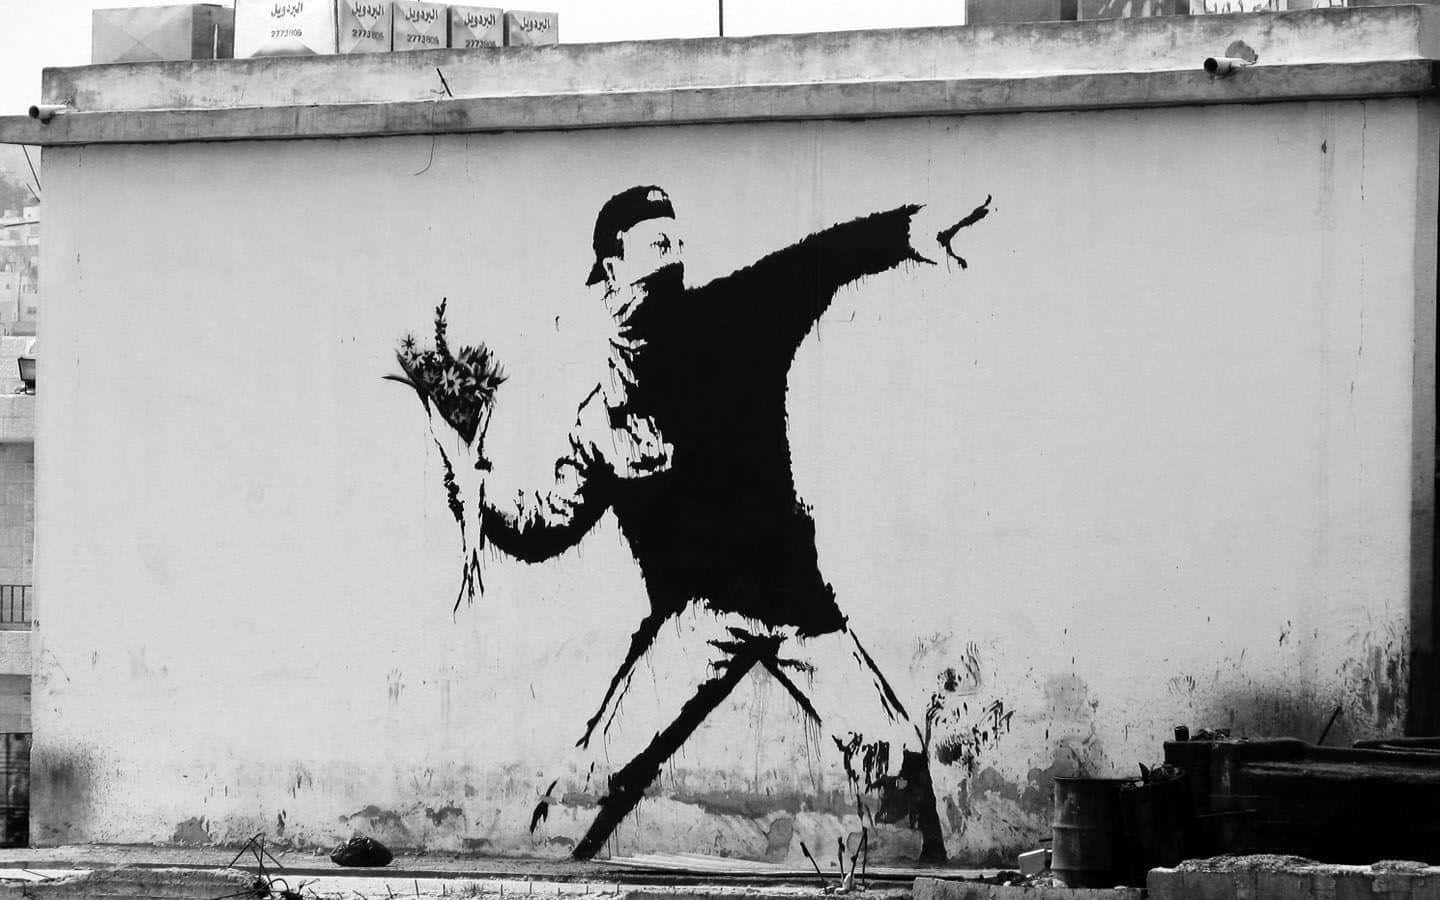 Taubenim Flug Mit Graffiti Von Banksy.